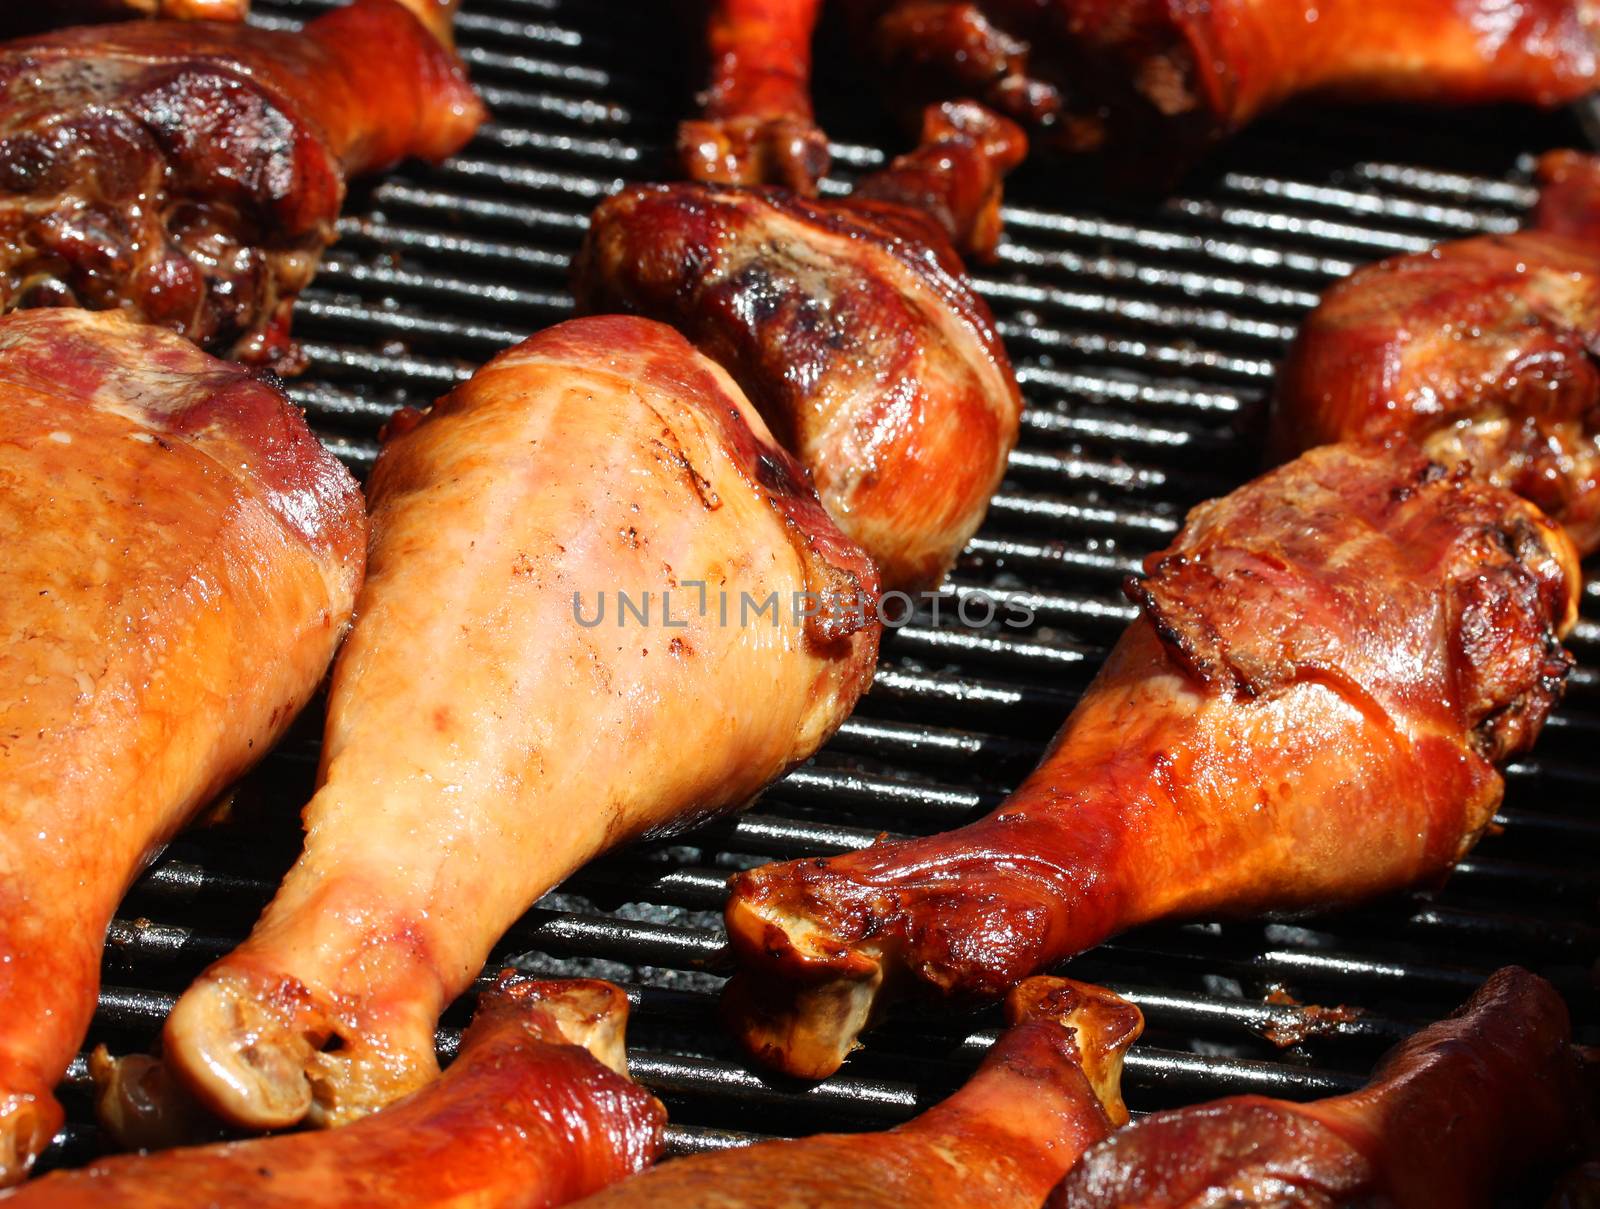 Fresh and juicy turkey legs on open grill